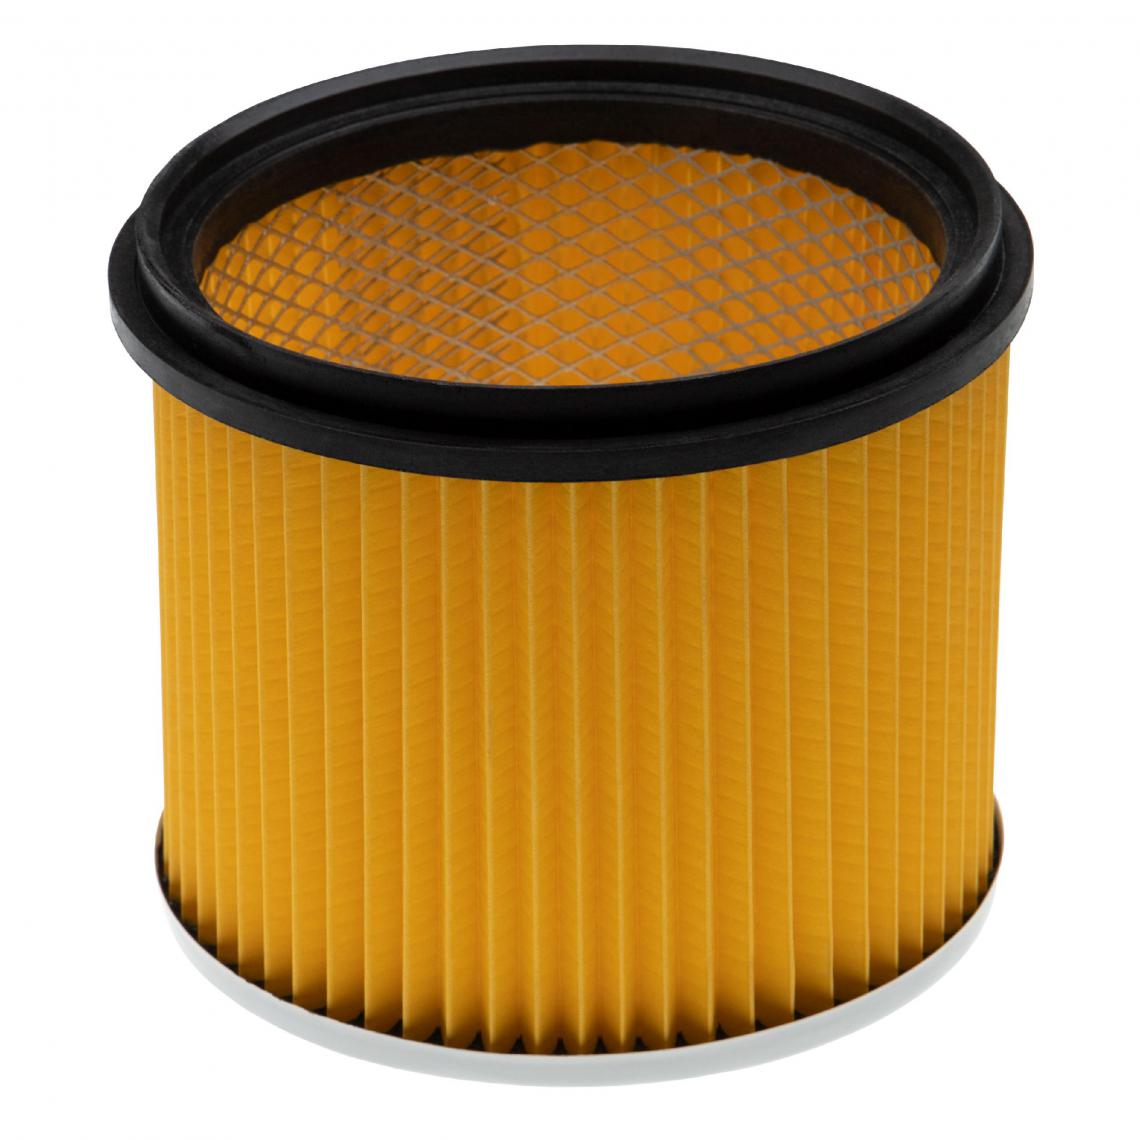 Vhbw - vhbw Filtre d'aspirateur filtre plissé compatible avec Einhell Inox 1500, Inox 30 A, RT-VC 1600 E, RT-VC 1630 SA, TC-VC 1820 SA, TE-VC 1820 aspirateur - Cordons d'alimentation